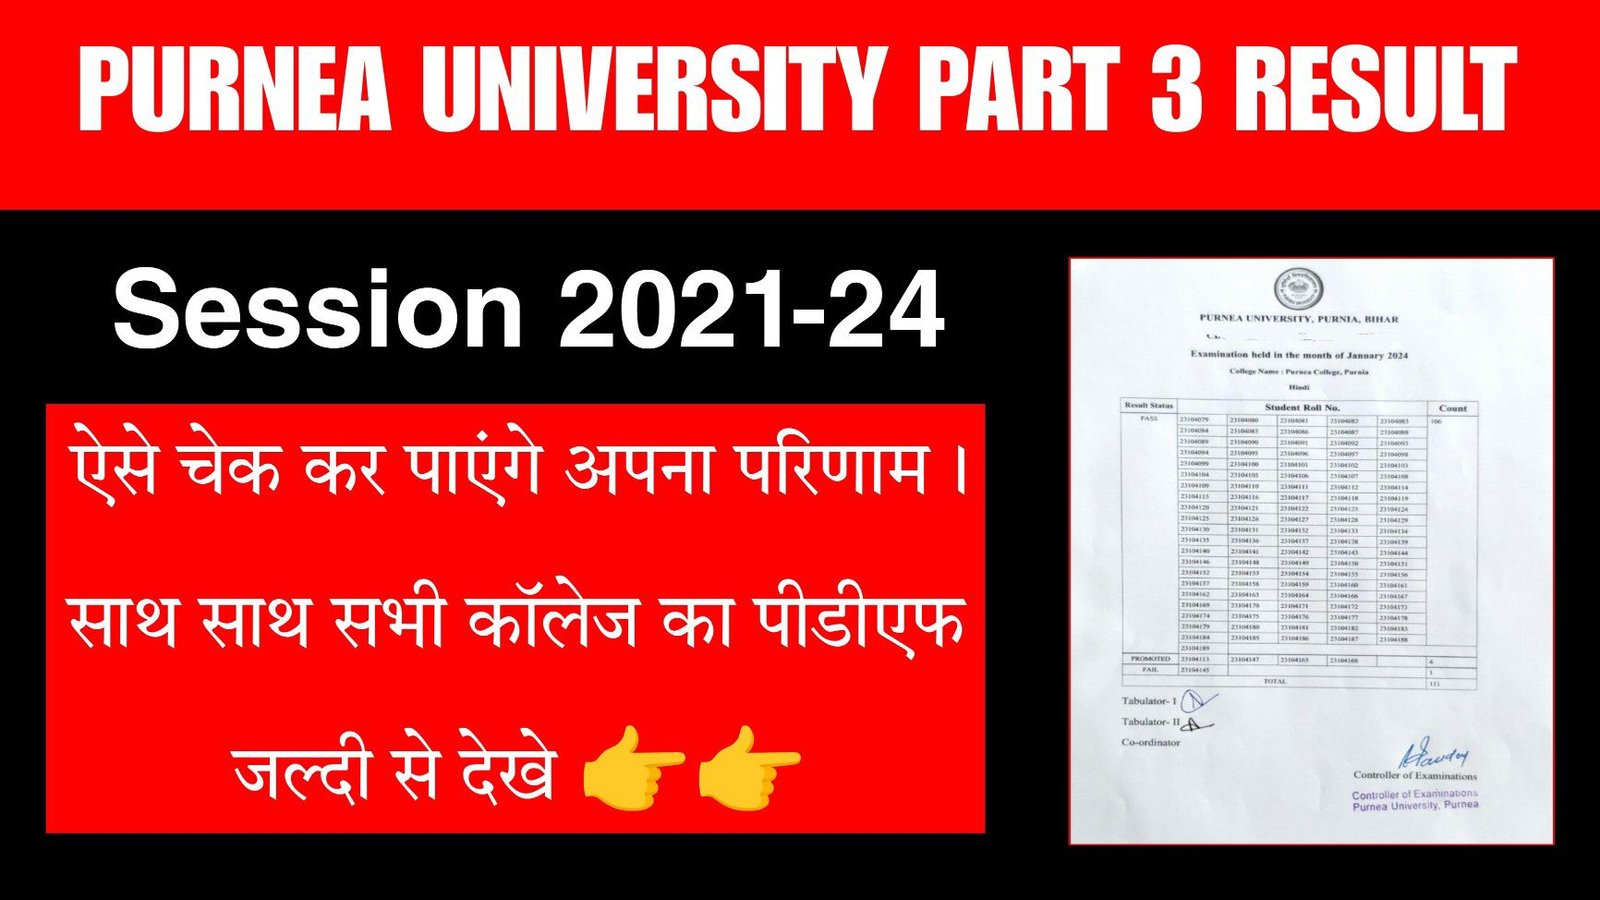 Purnea University Part 3 Result 2021-24